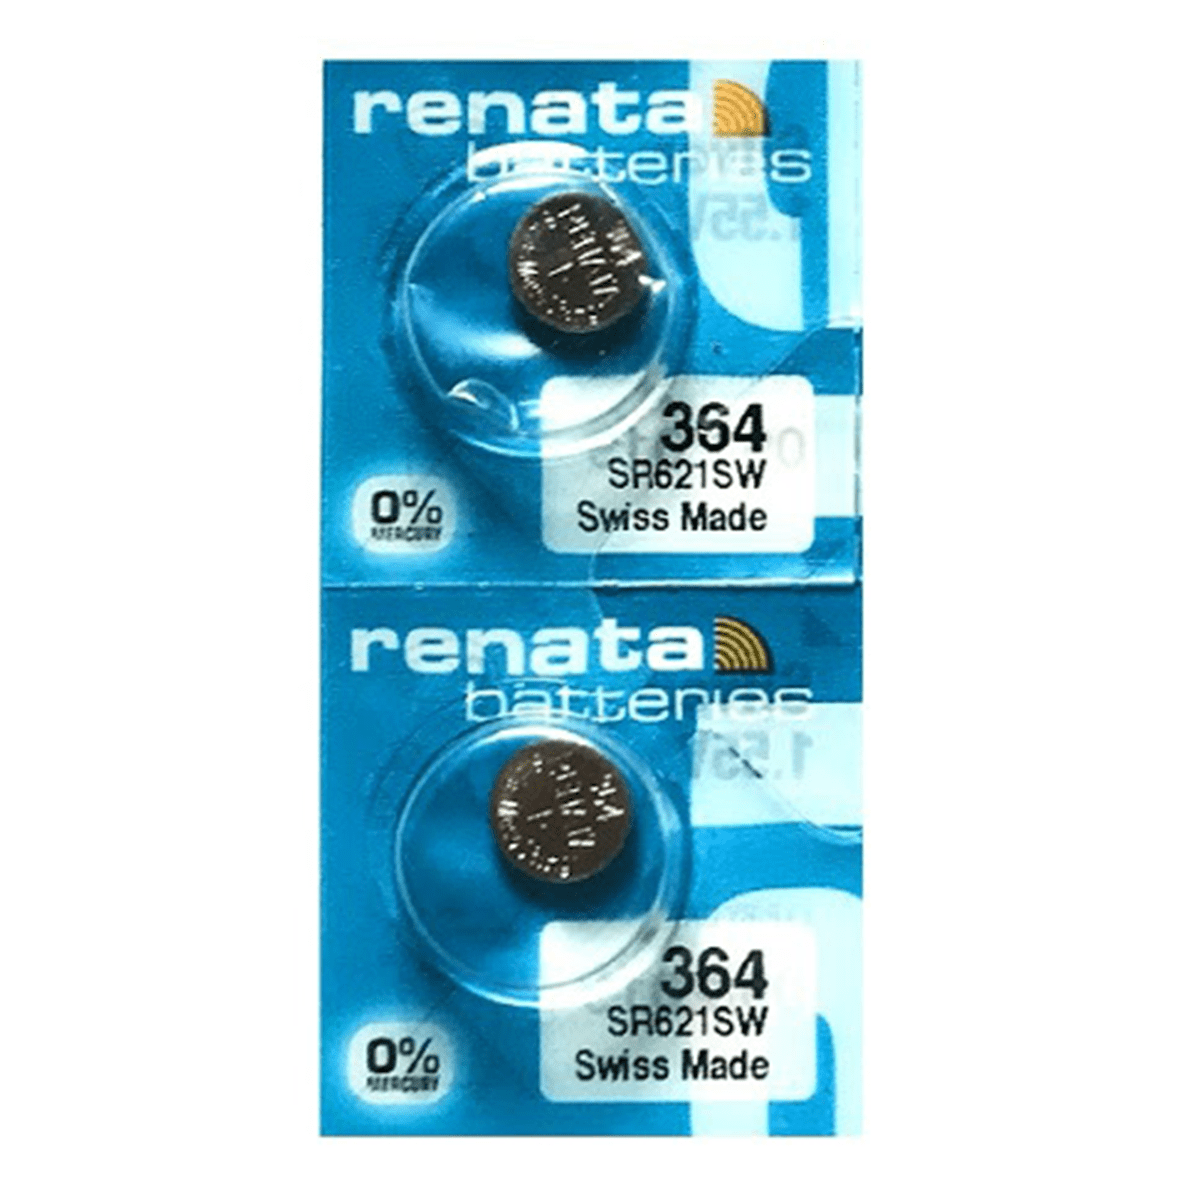 Renata 364 SR621SW Batteries - 1.55V Silver Oxide 364 Watch Battery (20  Count)